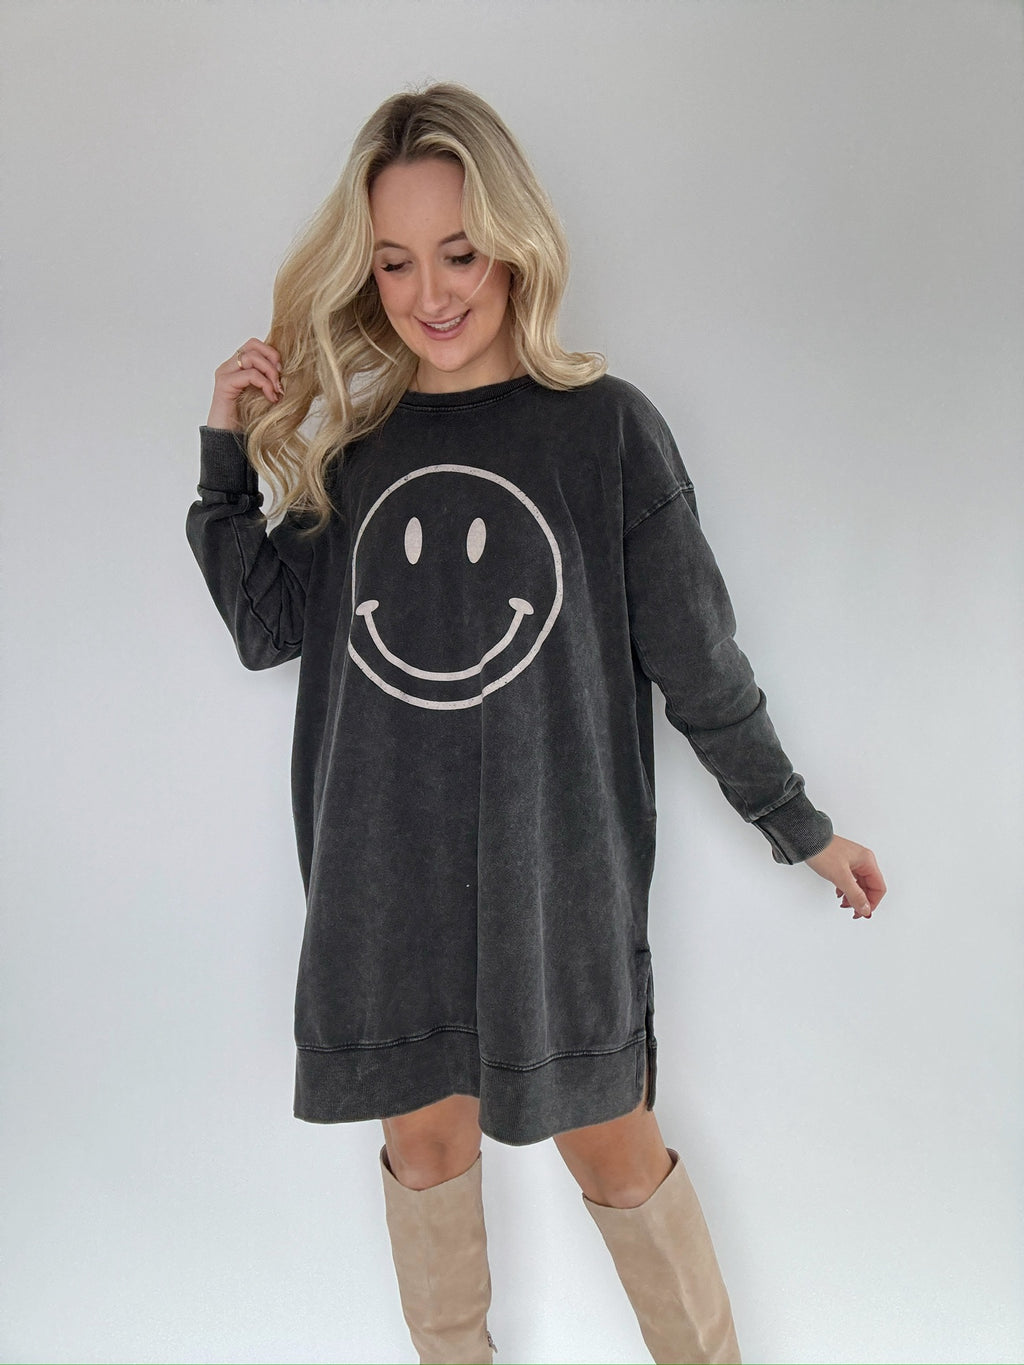 Make You Smile Sweatshirt Dress